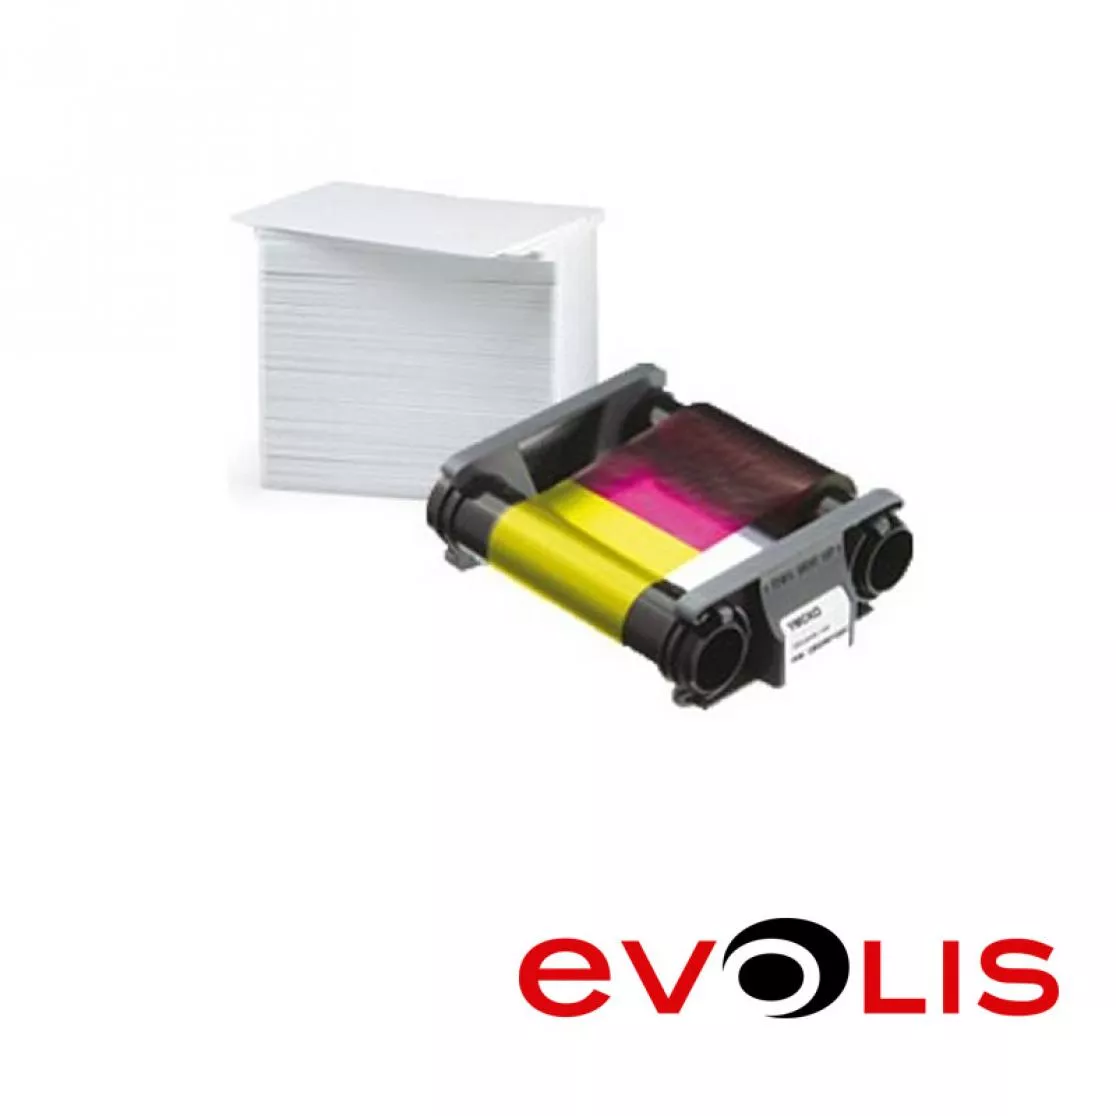 Bundle Ribbon colorful & 100 cards for Card Printer Evolis Badgy 200